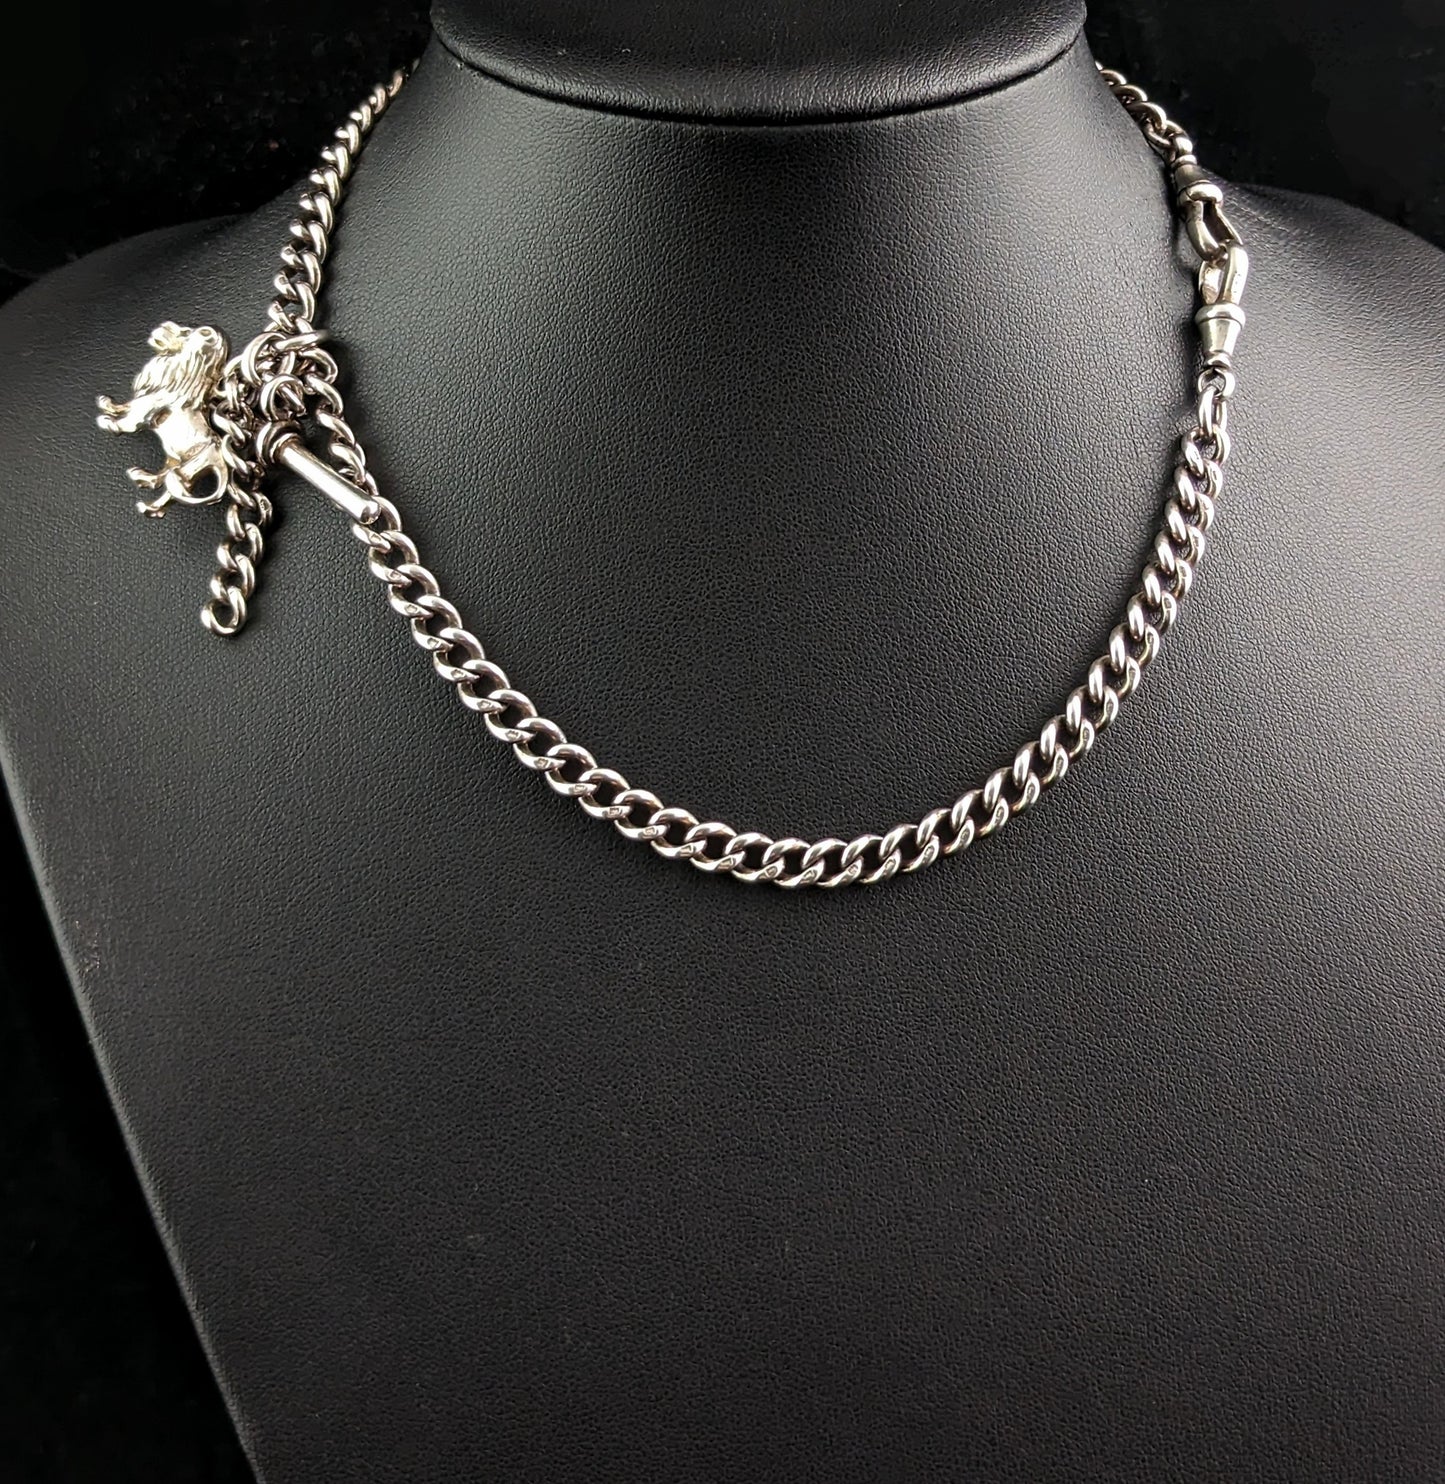 Antique silver Albert chain, lion fob, Edwardian